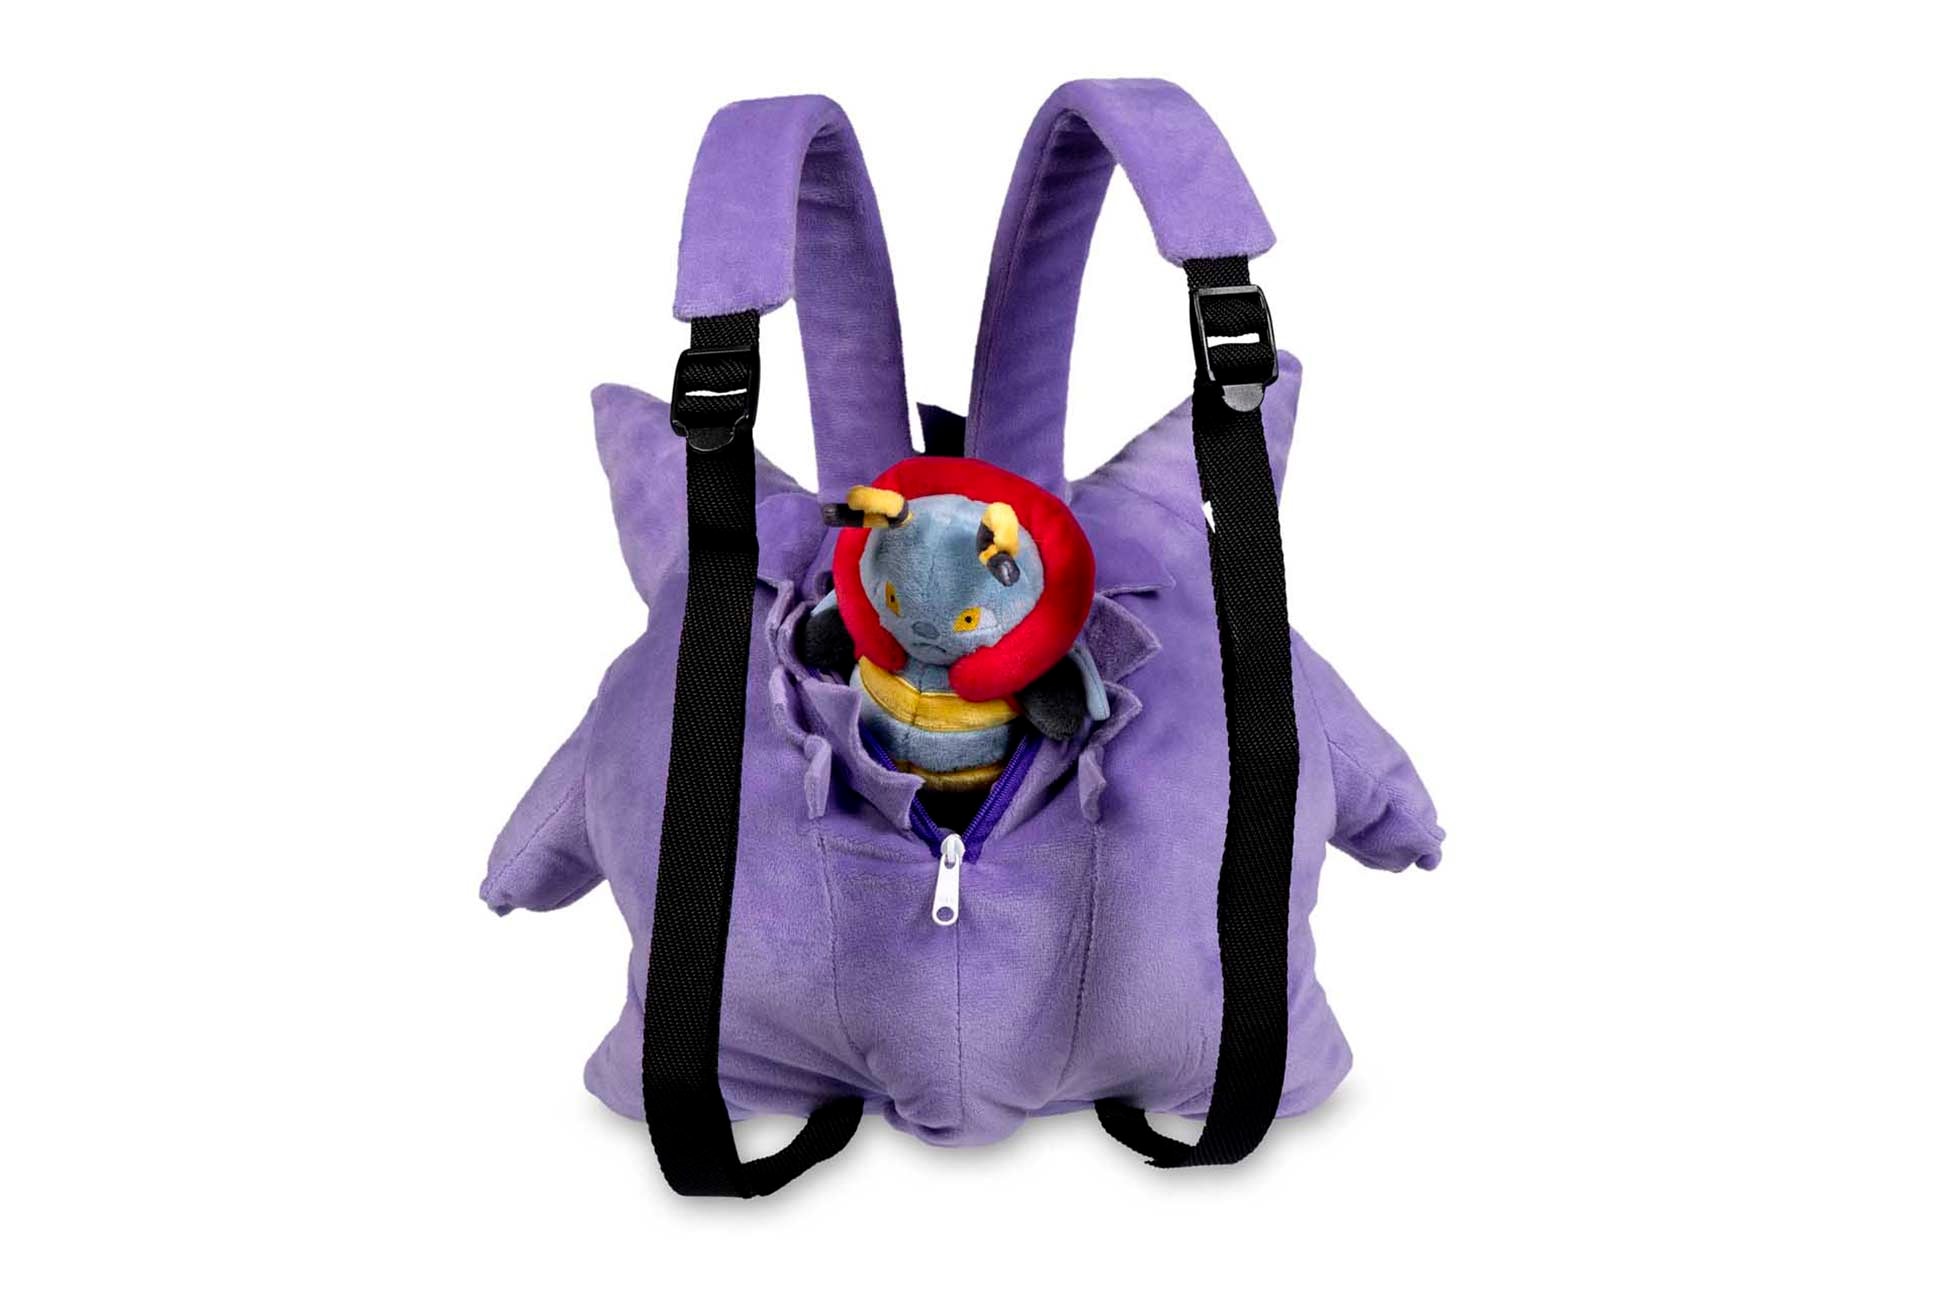 pokémon Gengar Backpack release pokemon center levendar town plush backpack kids accessories 